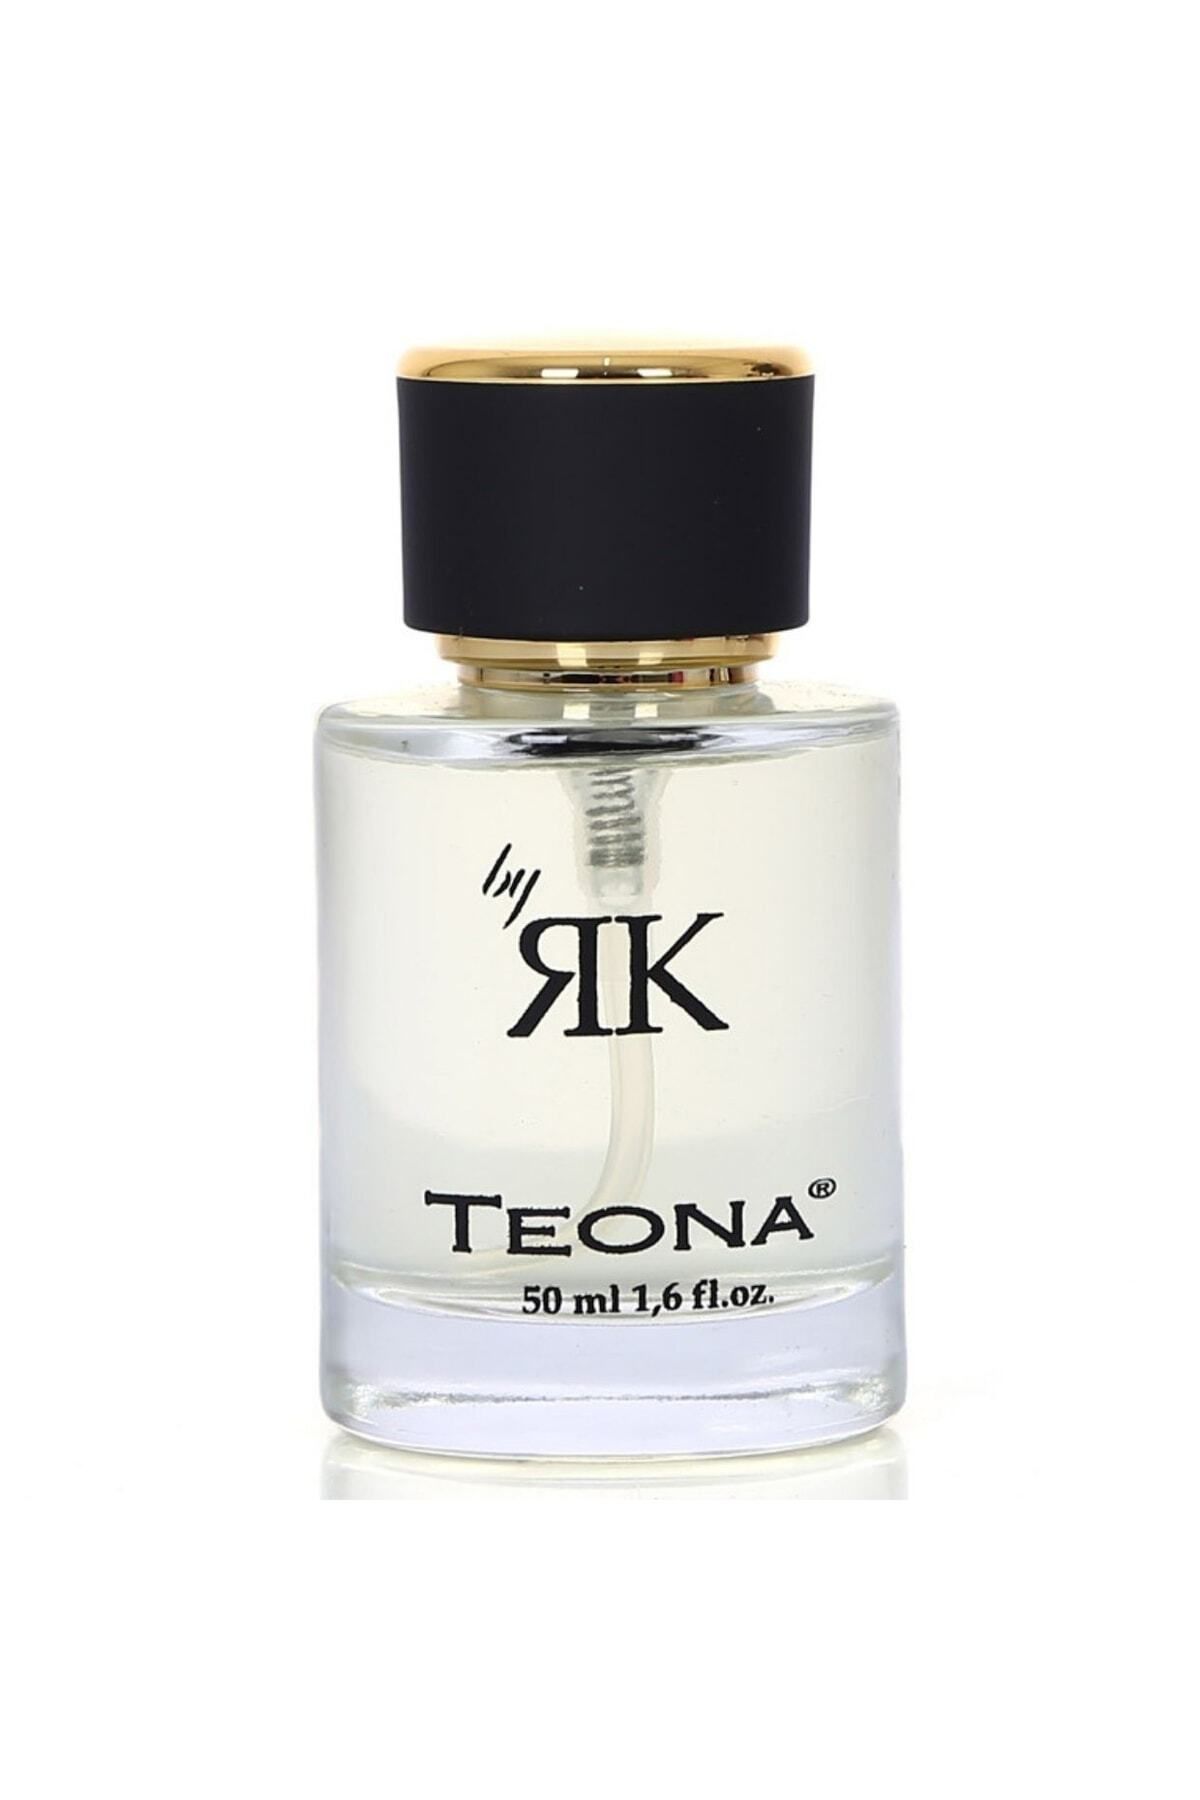 TEONA By Rk 50ml Kreasyon Erkek Parfüm